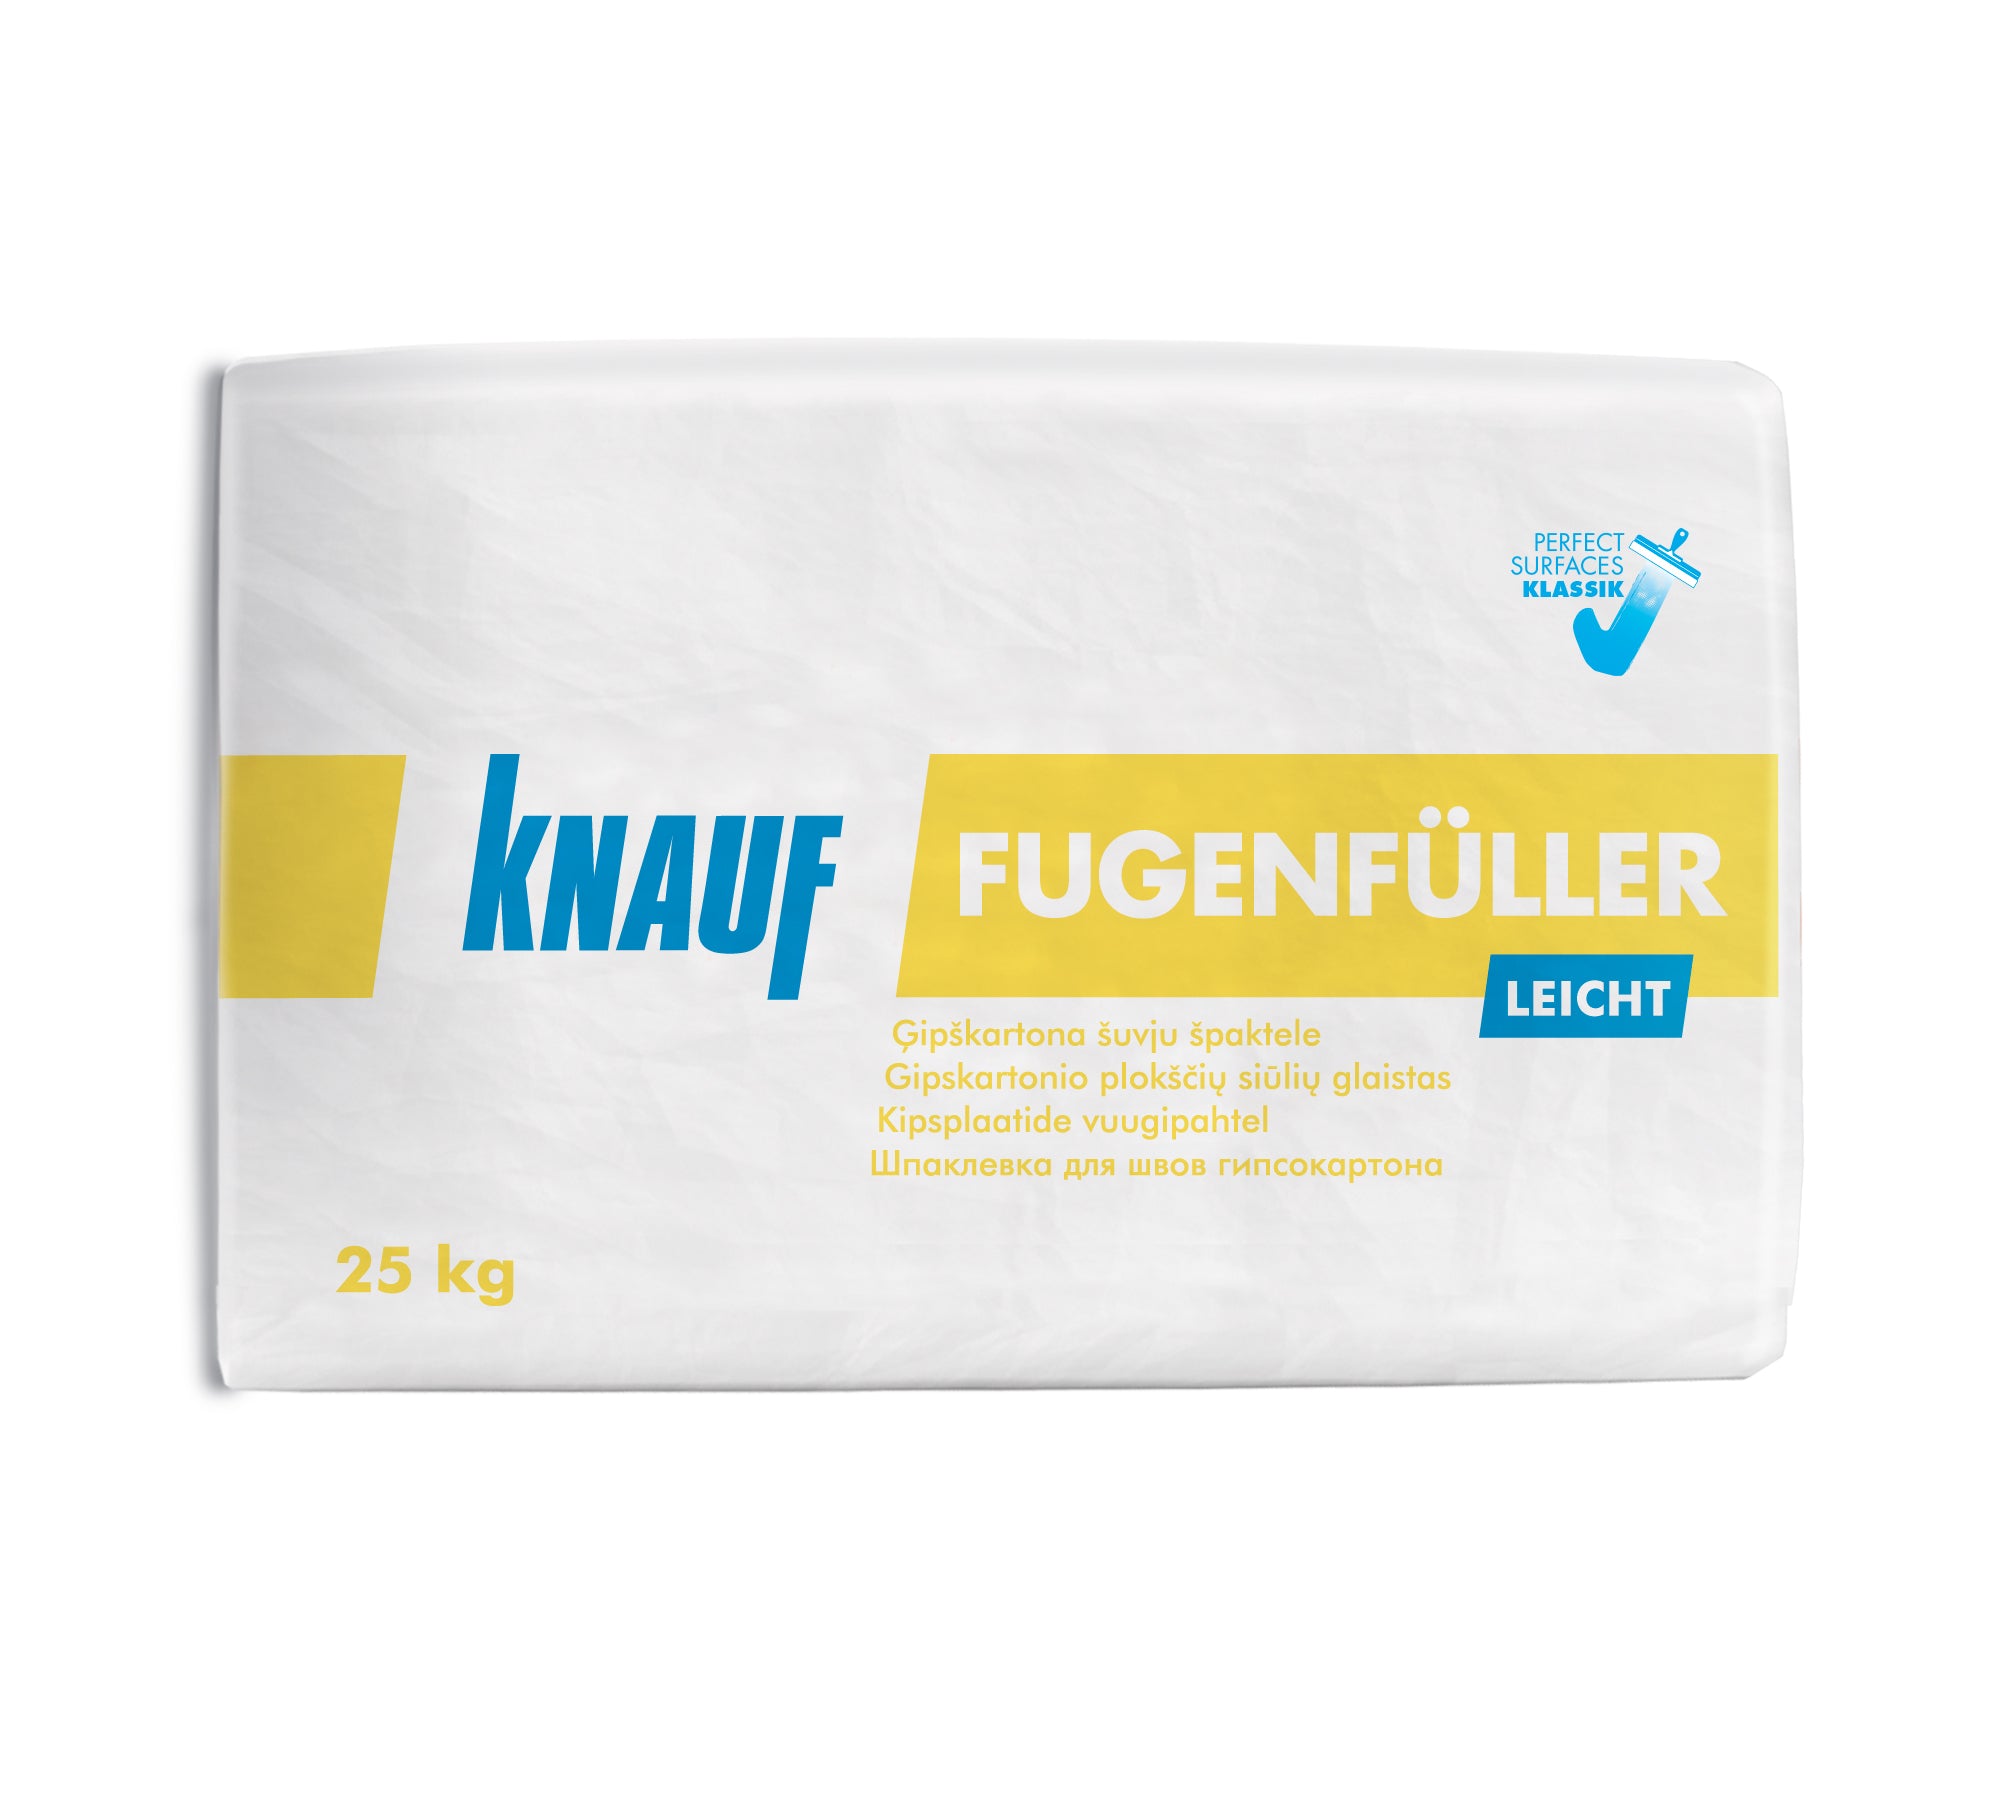 Knauf Fugenfüller Leicht, 25kg Gips-Fugenspachtelmasse, Feinspachtel